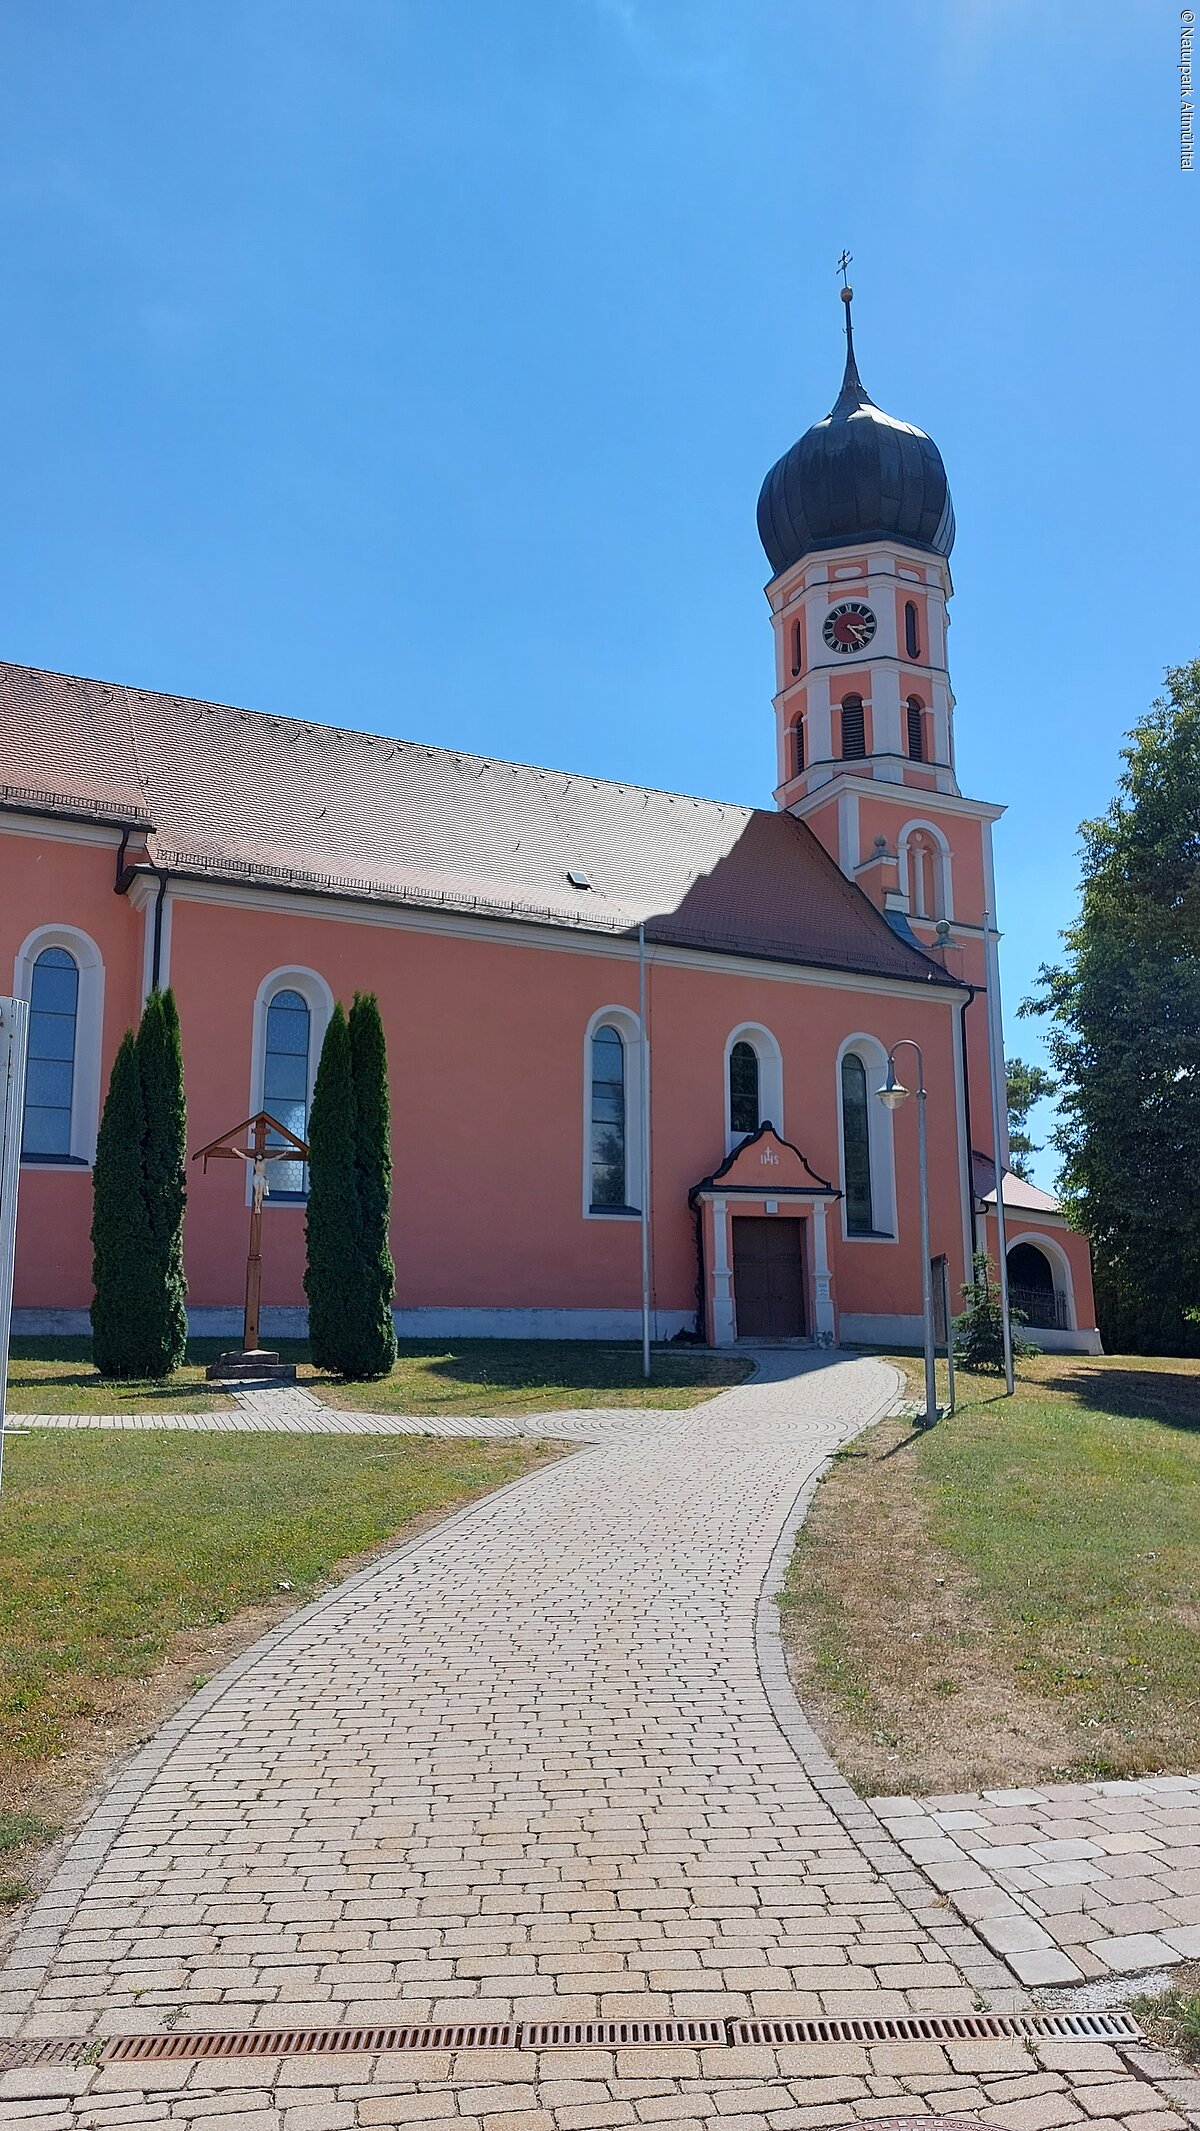 St. Michaels Kirche in Gnotzheim